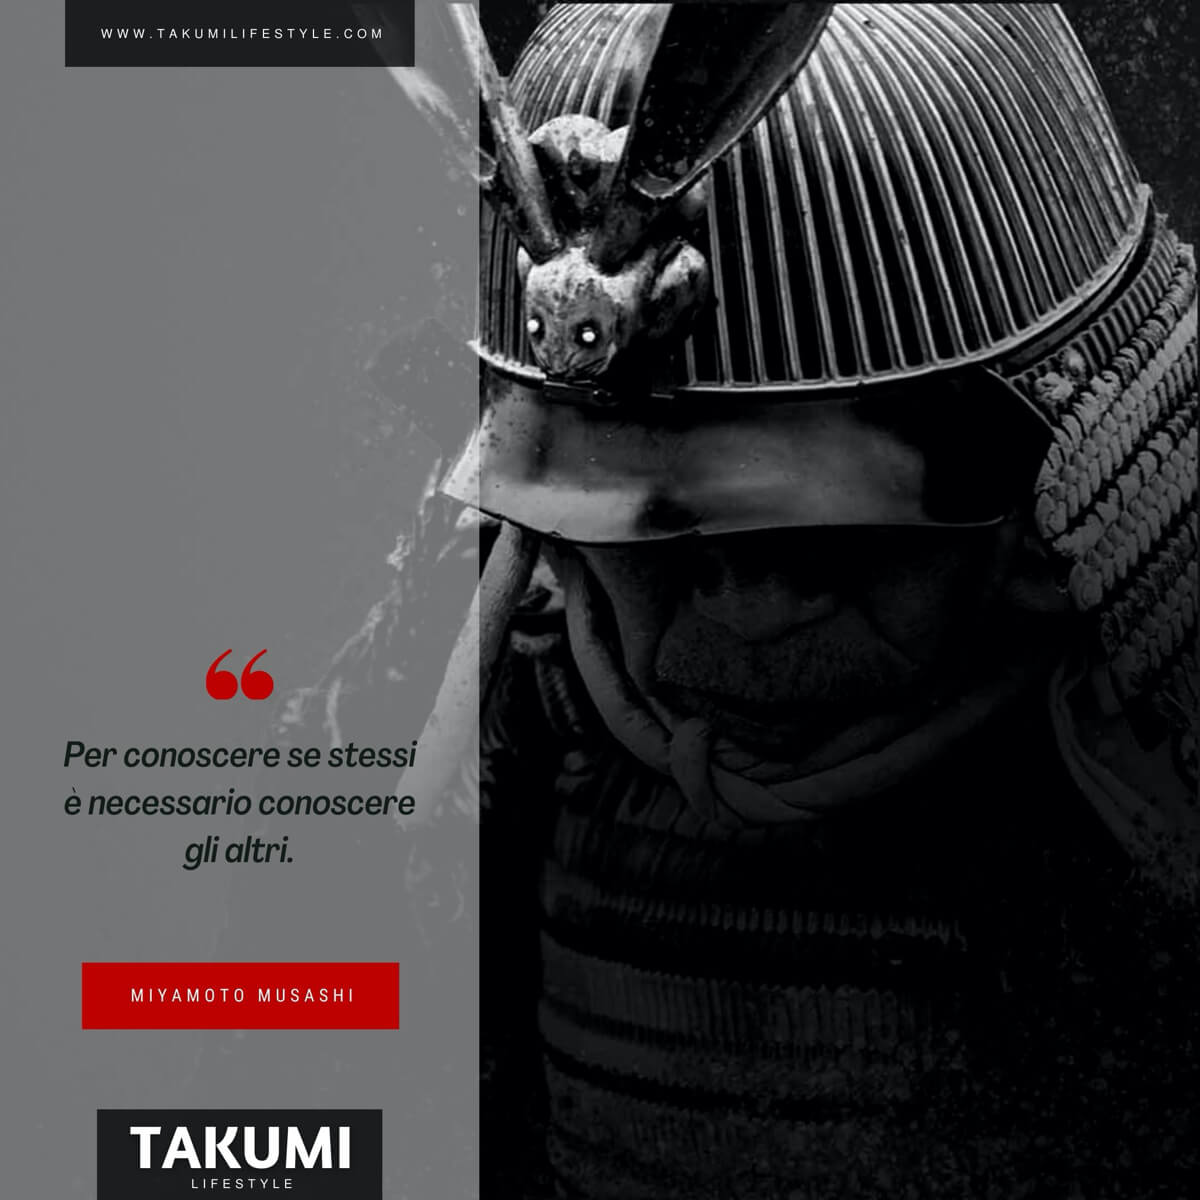 TAKUMI lifestyle - Quote#20 - Miyamoto Musashi